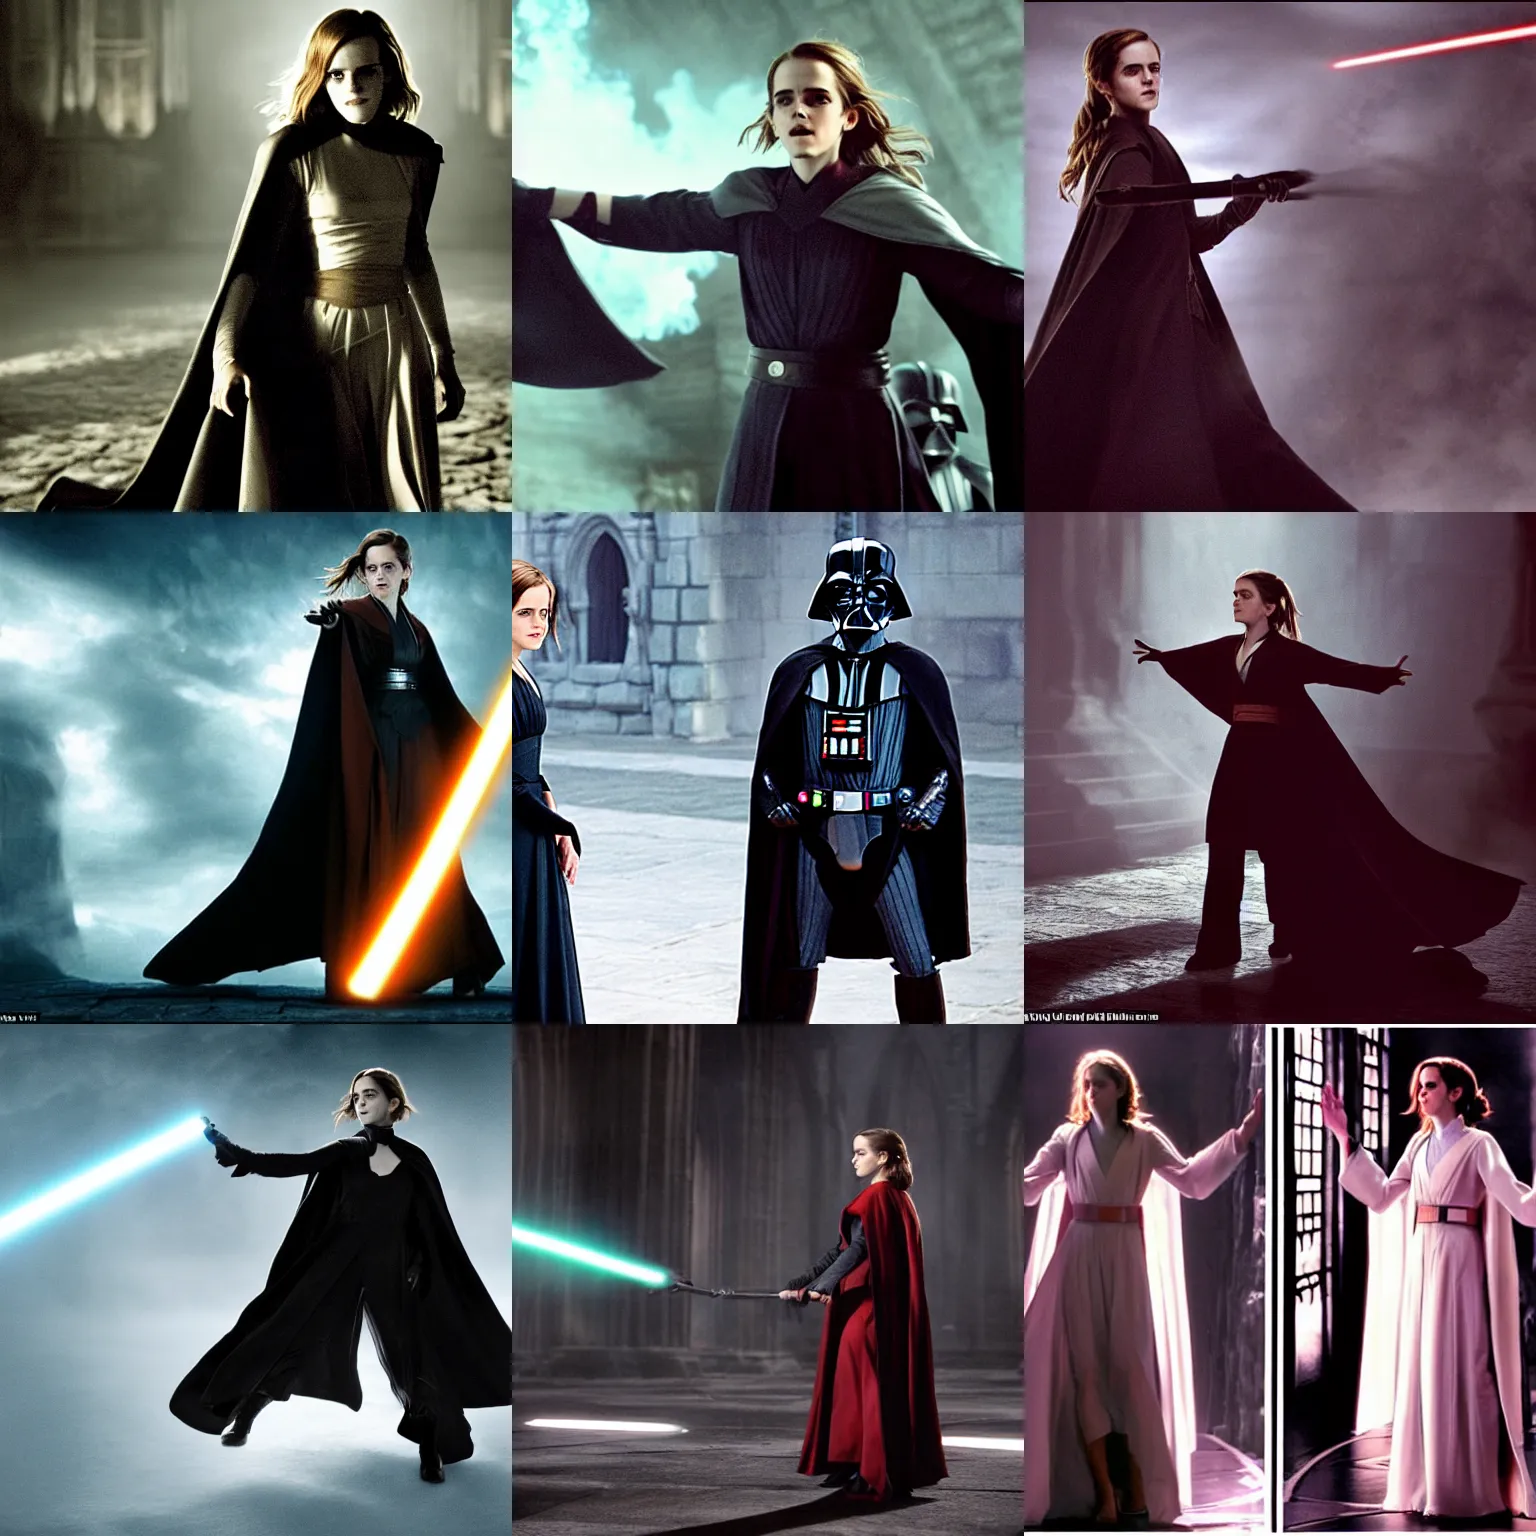 Prompt: Emma Watson wearing Hogwarts robes, casting a spell on Darth Vader, film still, cinematic, epic, dramatic lighting